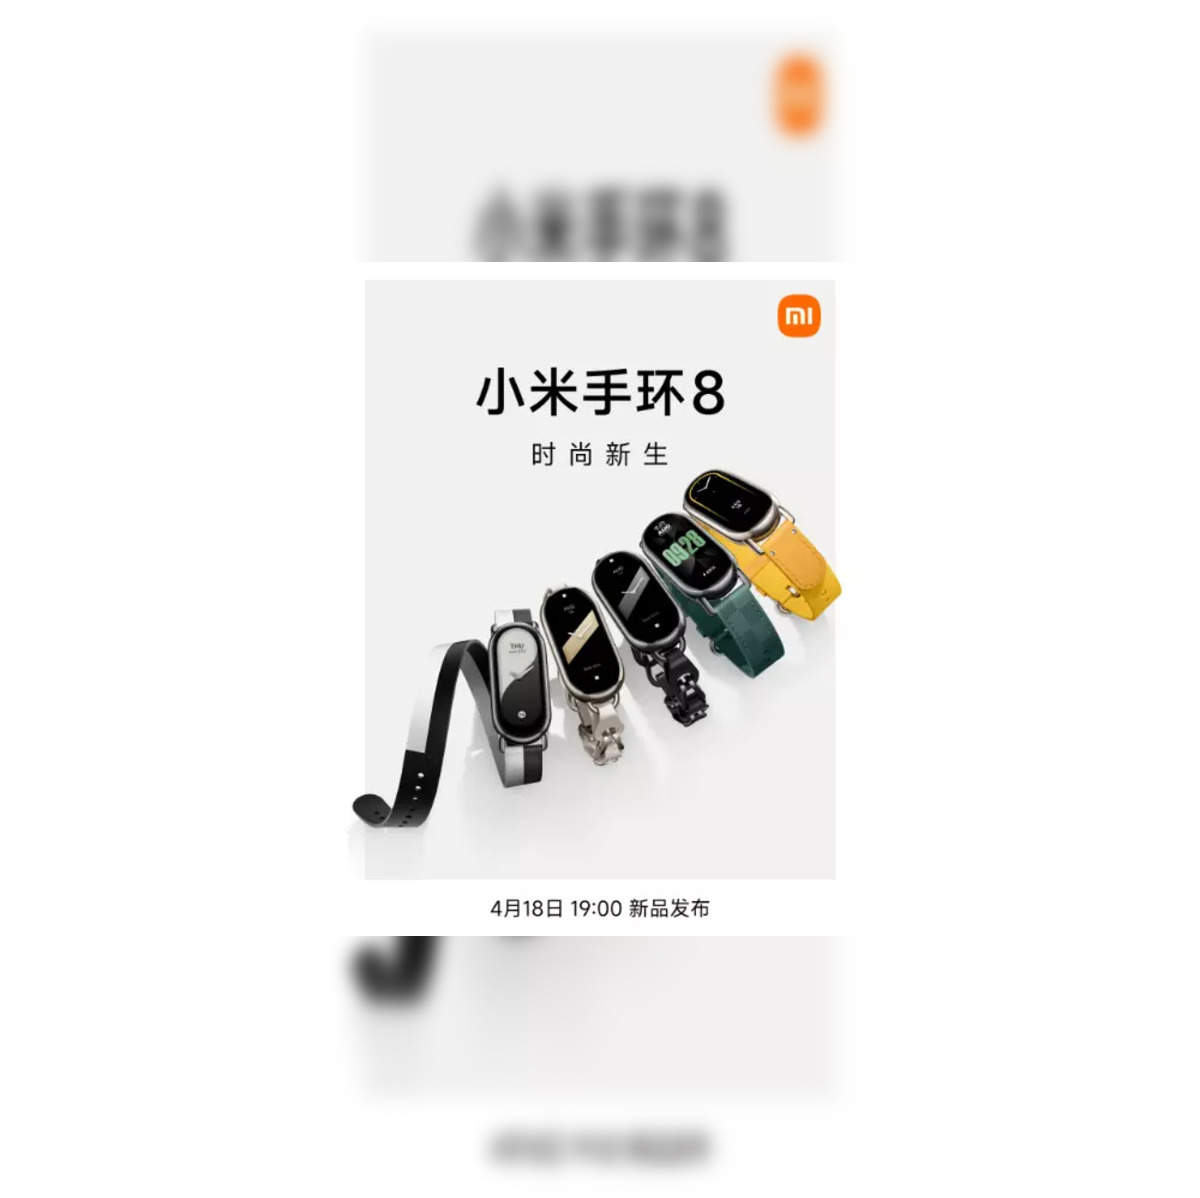 Xiaomi Mi Band 6 (Mi Smart Band 6): Specs, Features, Pricing